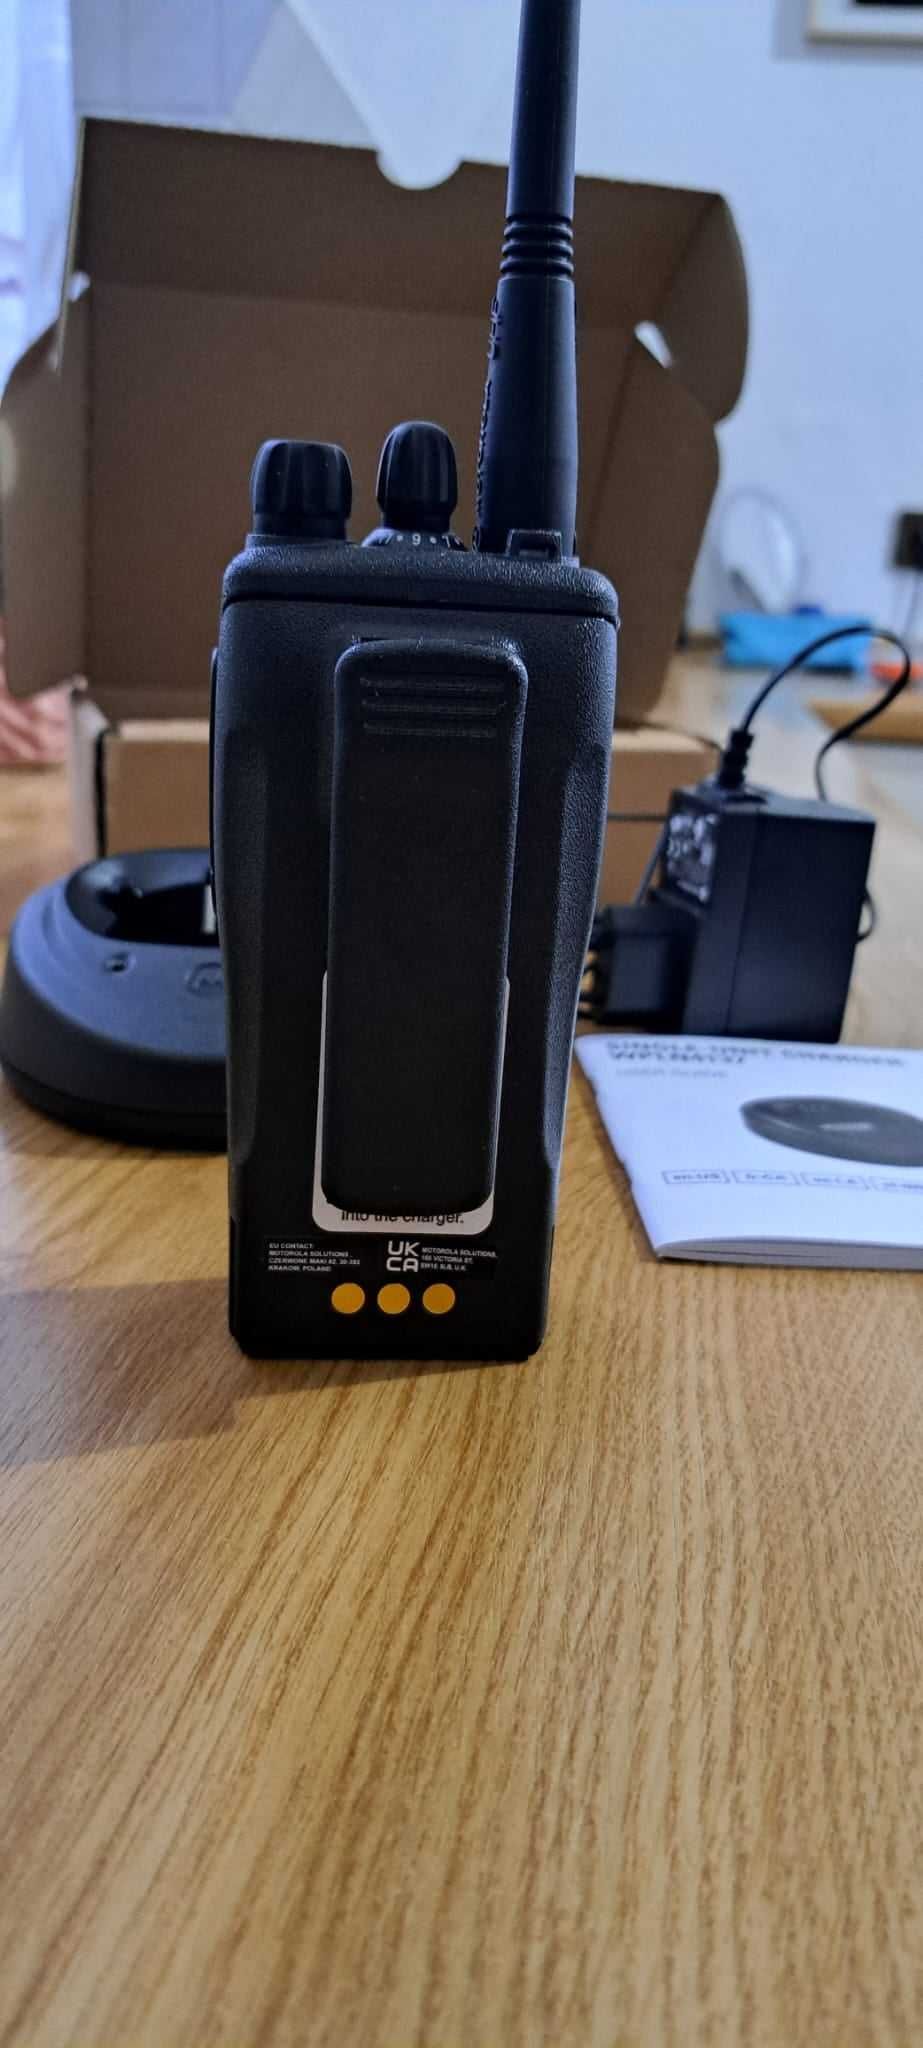 Motorola DP1400 Digital Portable TWO-WAY RADIO Радио Станция